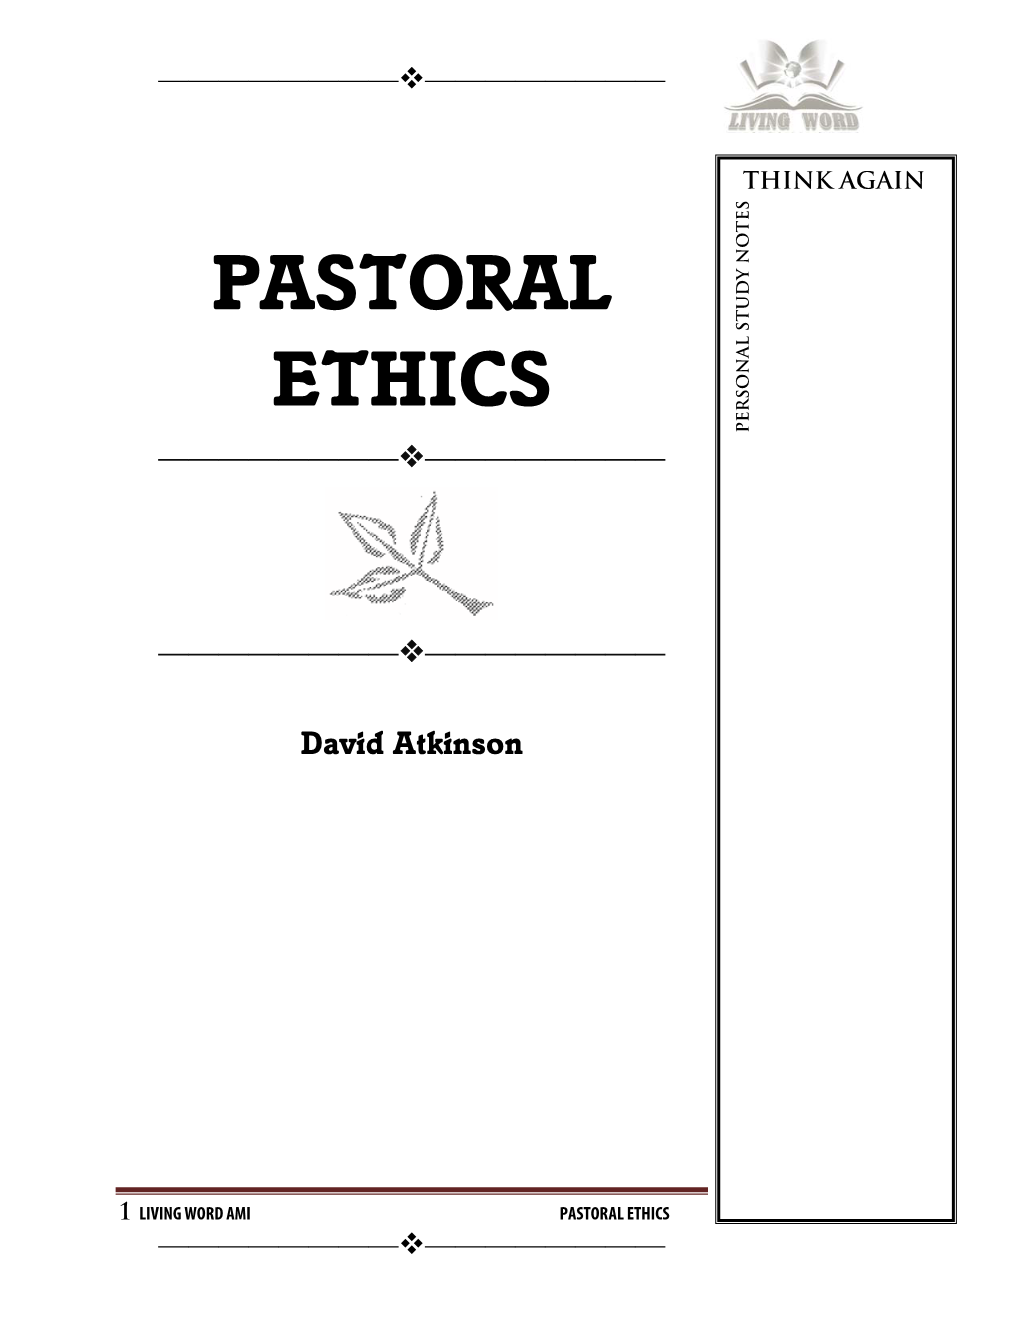 Pastoral Ethics Study Notes L